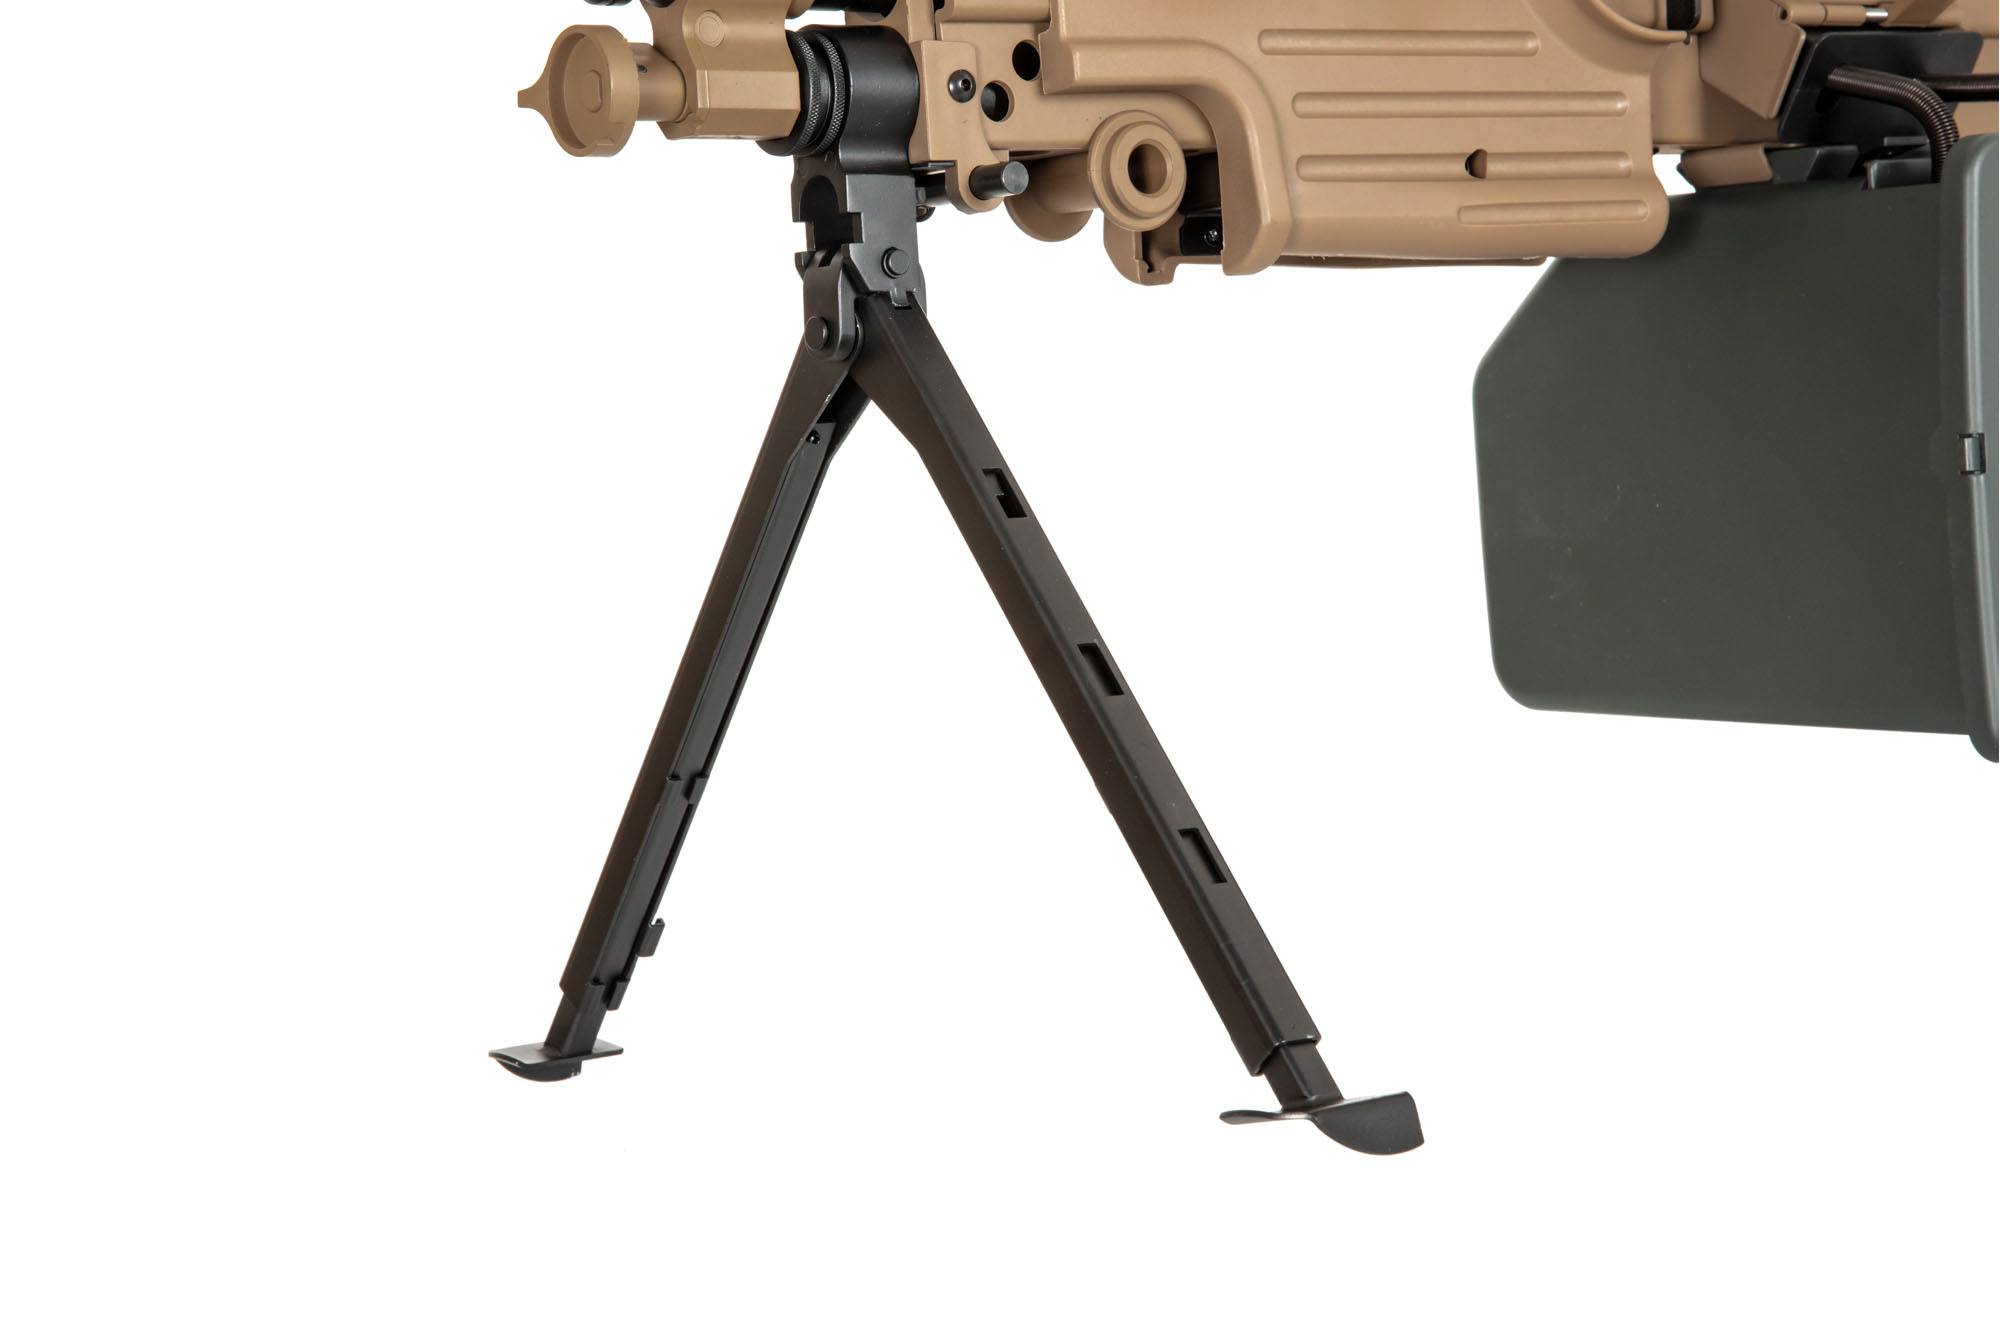 PARA SA-249 CORE ™ Machine Gun Replica - Tan by Specna Arms on Airsoft Mania Europe